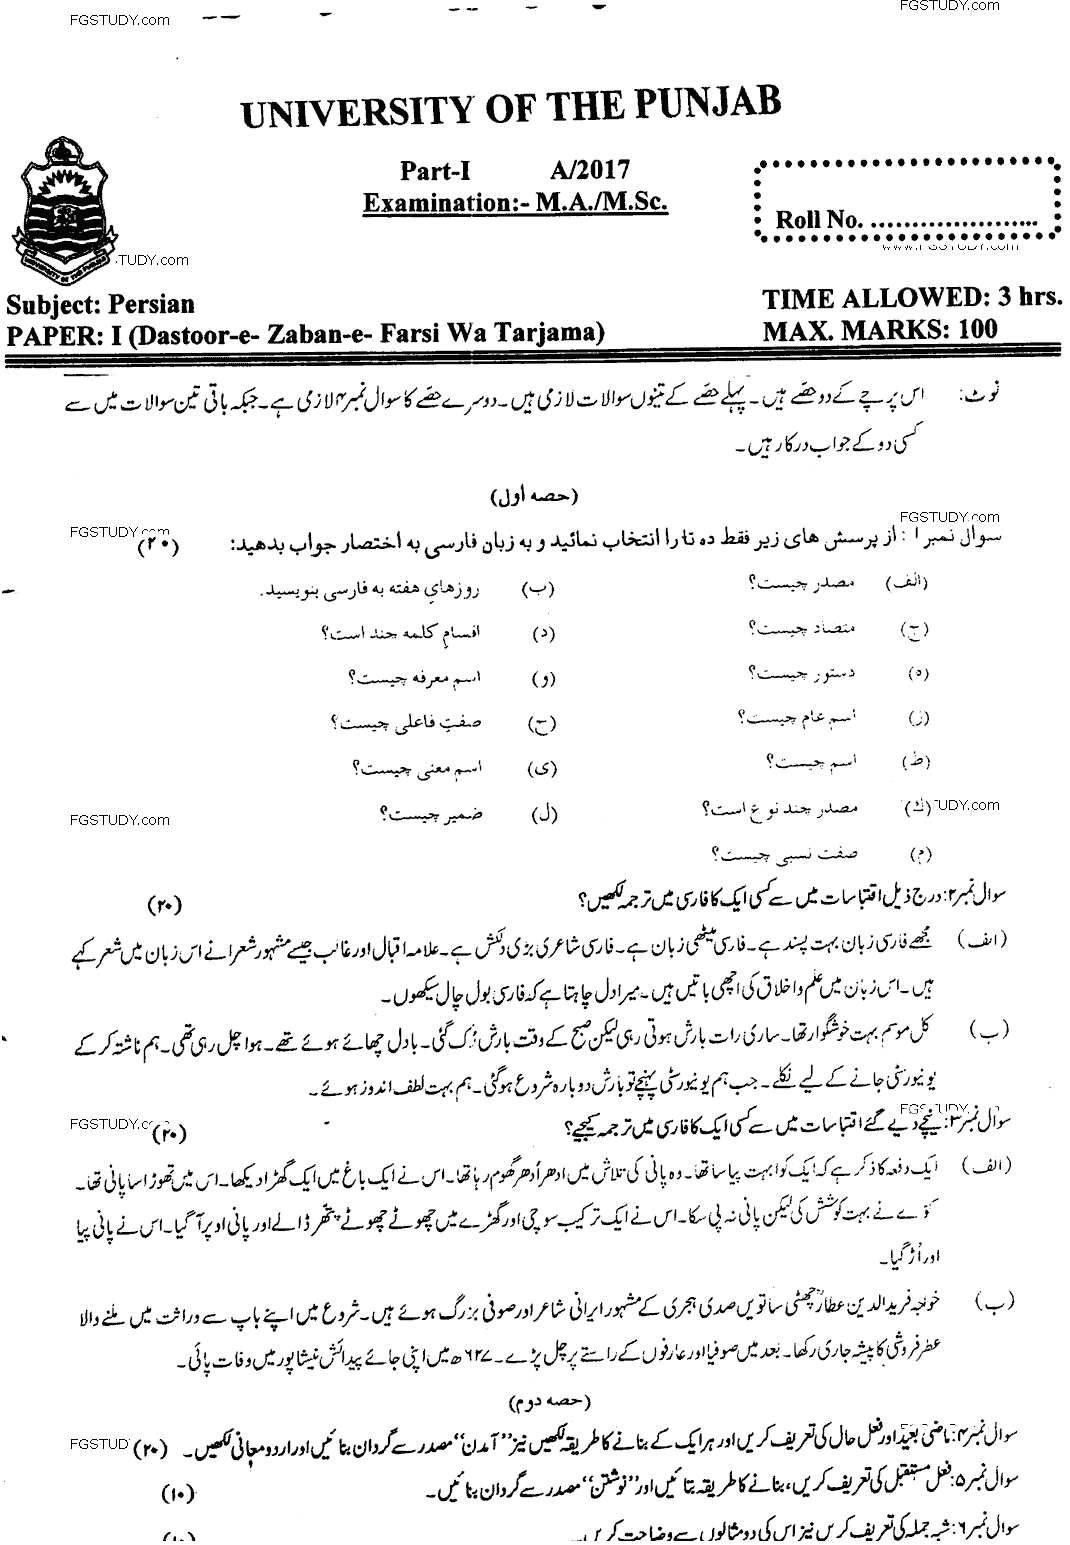 MA Part 1 Persian Dasioor E Zaban E Farsi Wa Tarjama Past Paper 2017 Punjab University